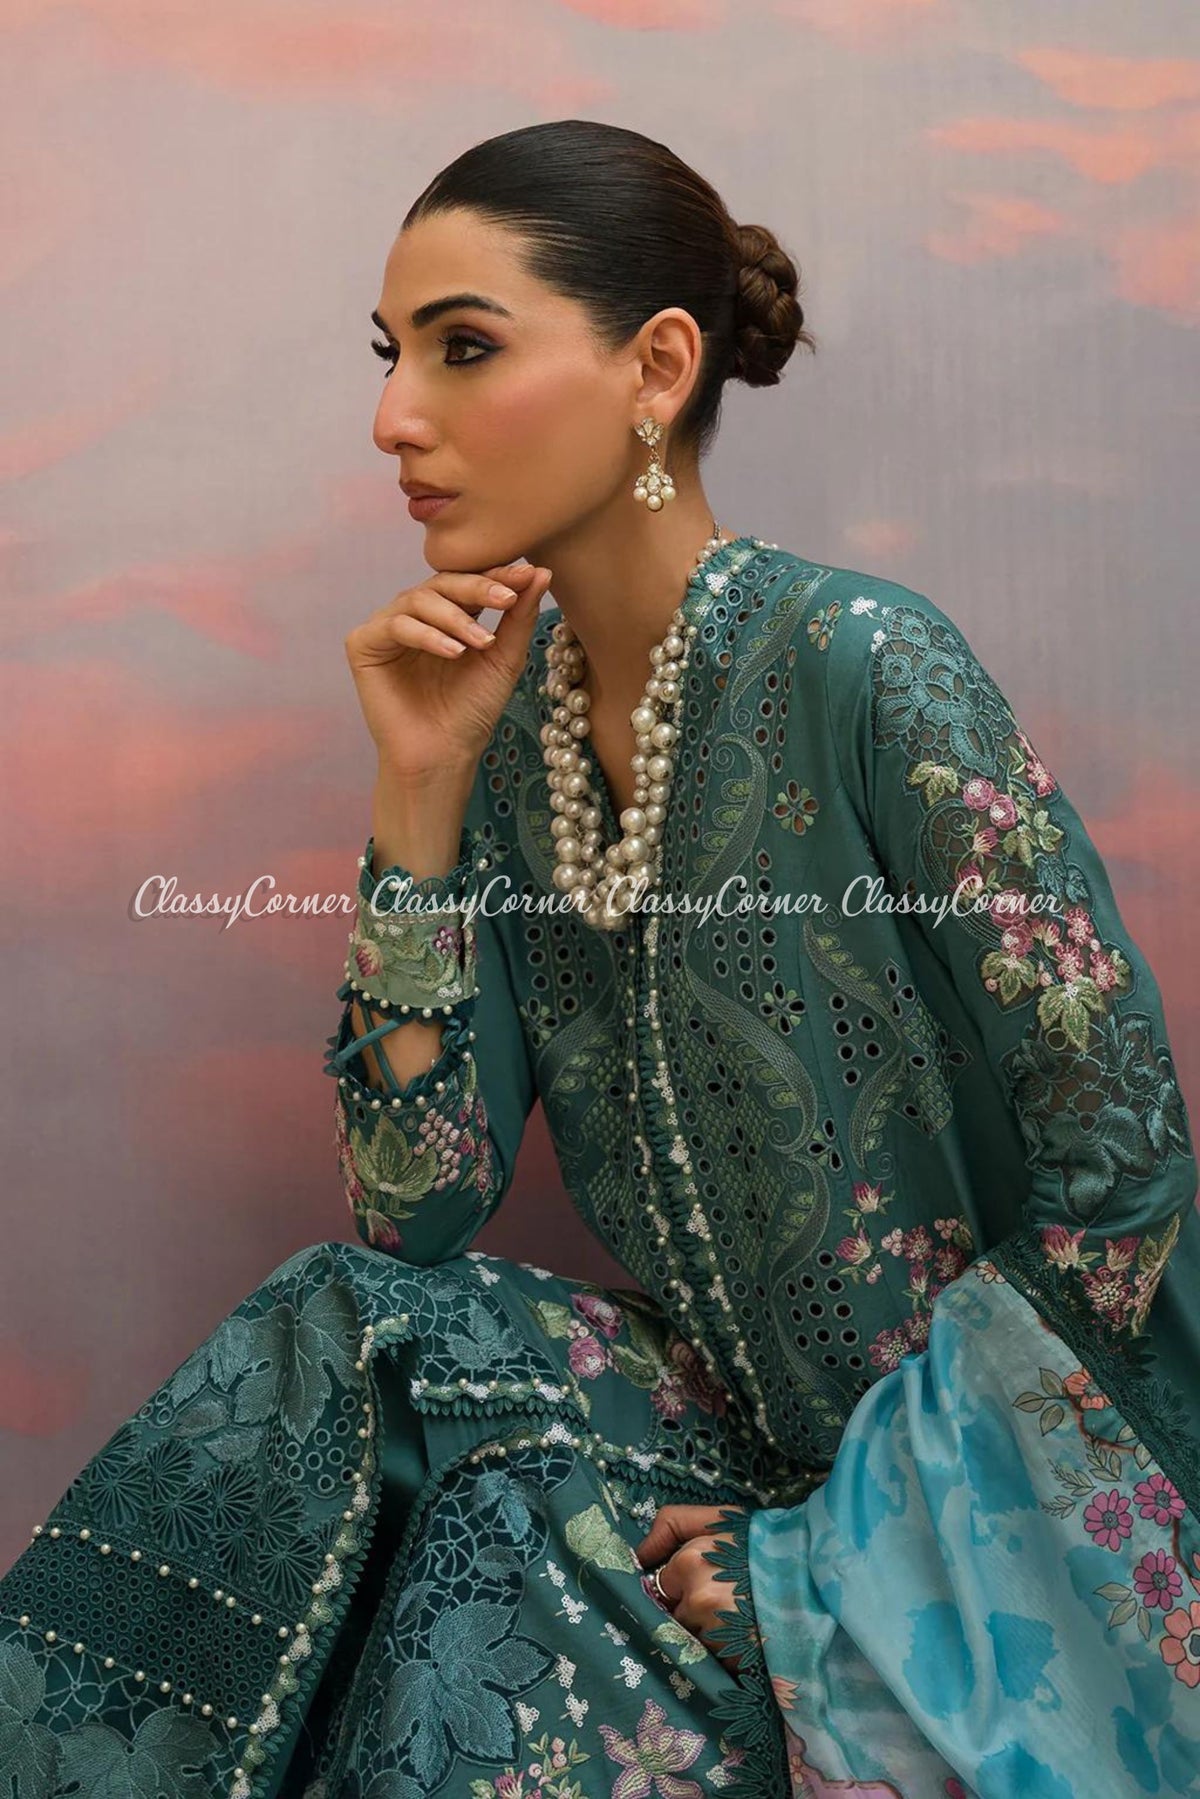 Traditional Pakistani attire